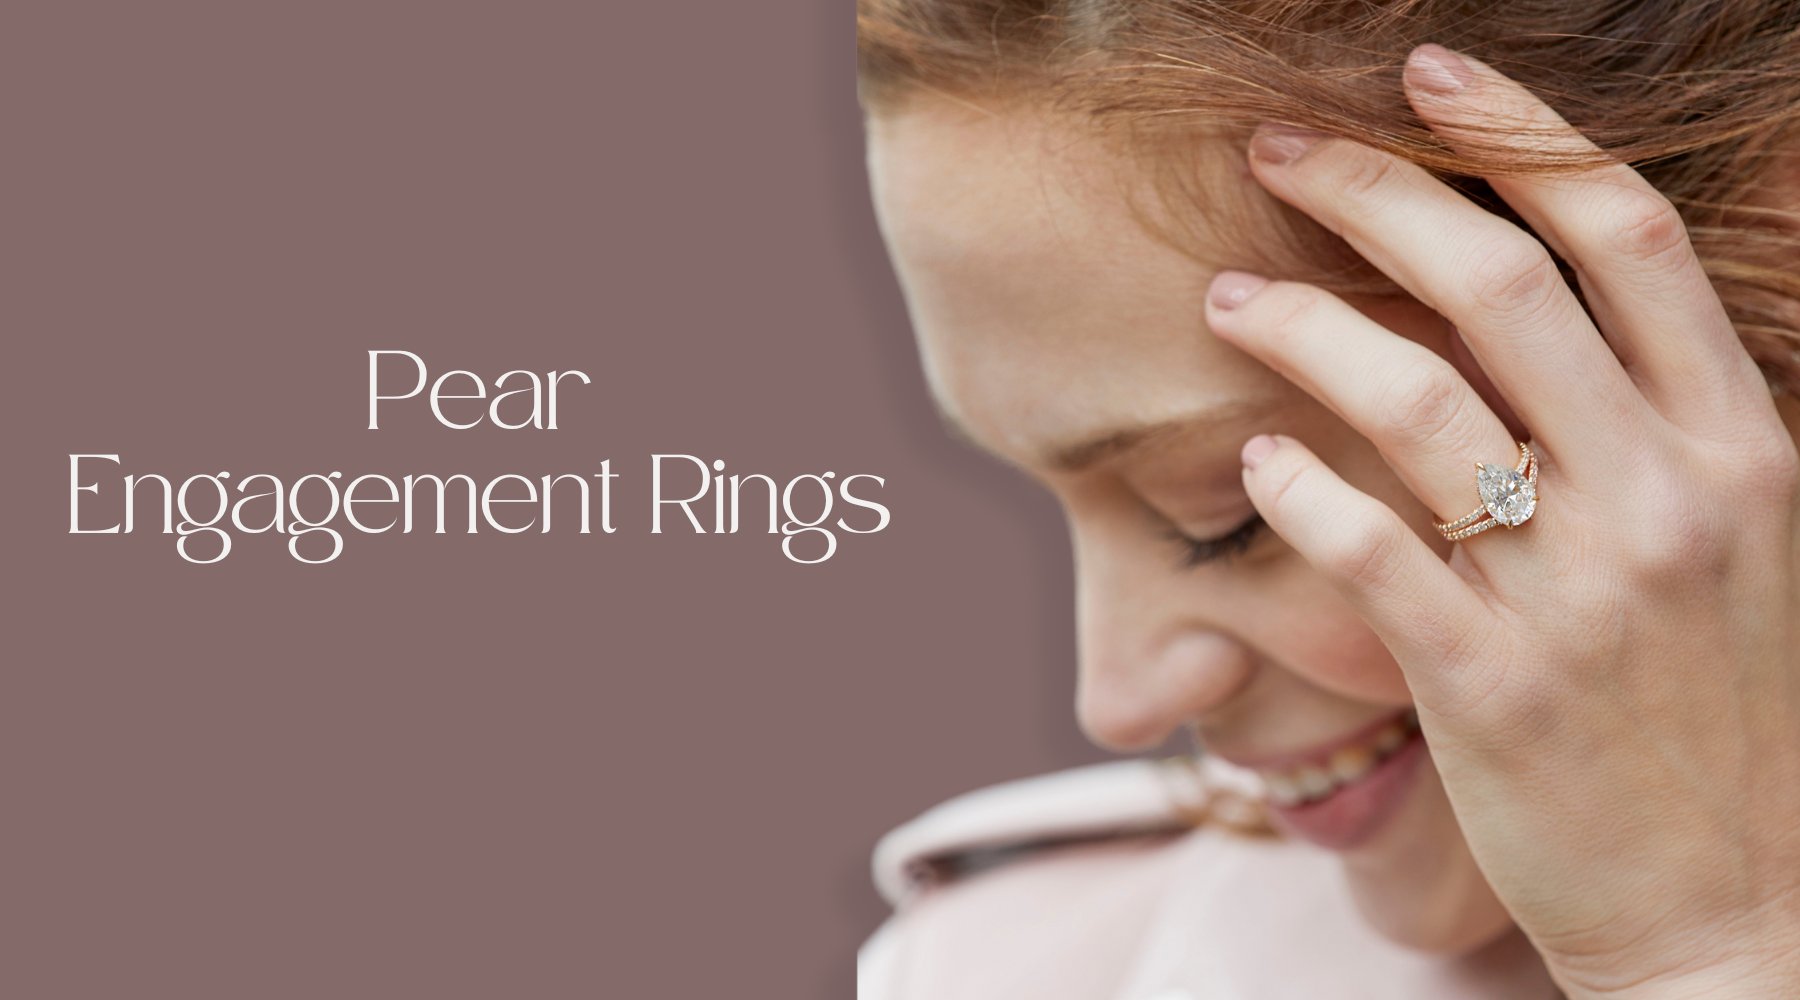 Pear Cut Engagement Rings